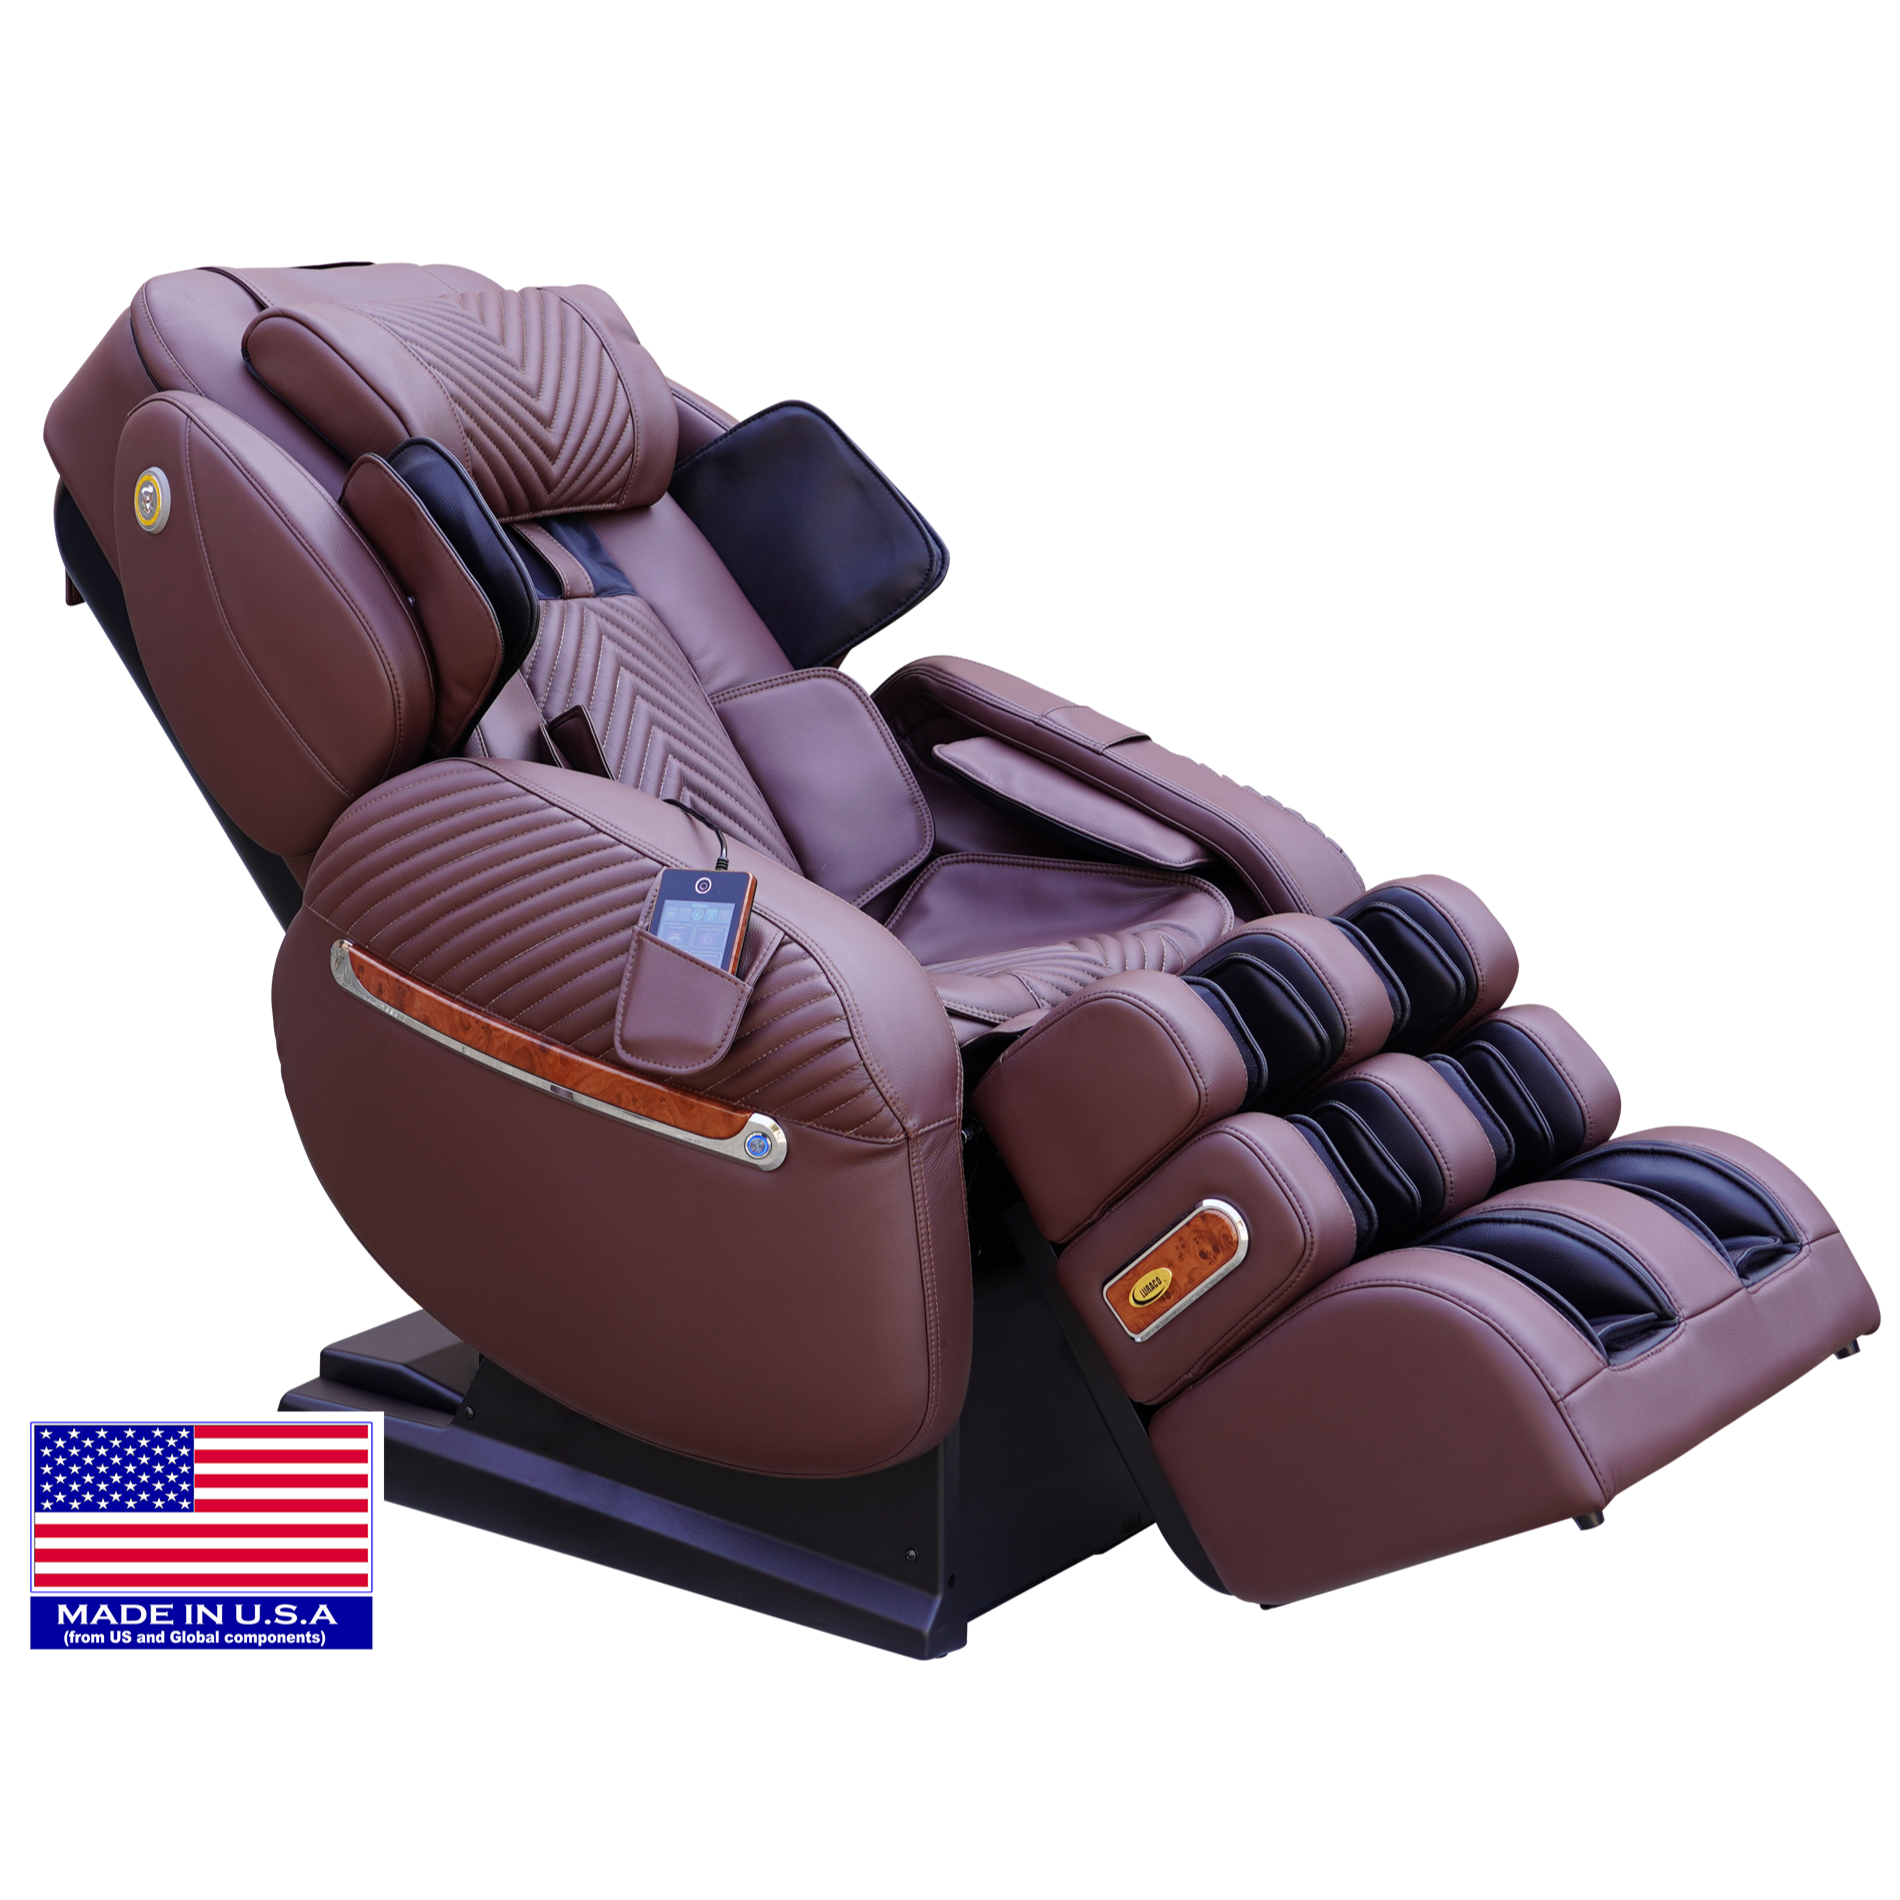 Luraco iRobotics 9 Max Special Edition Massage Chair